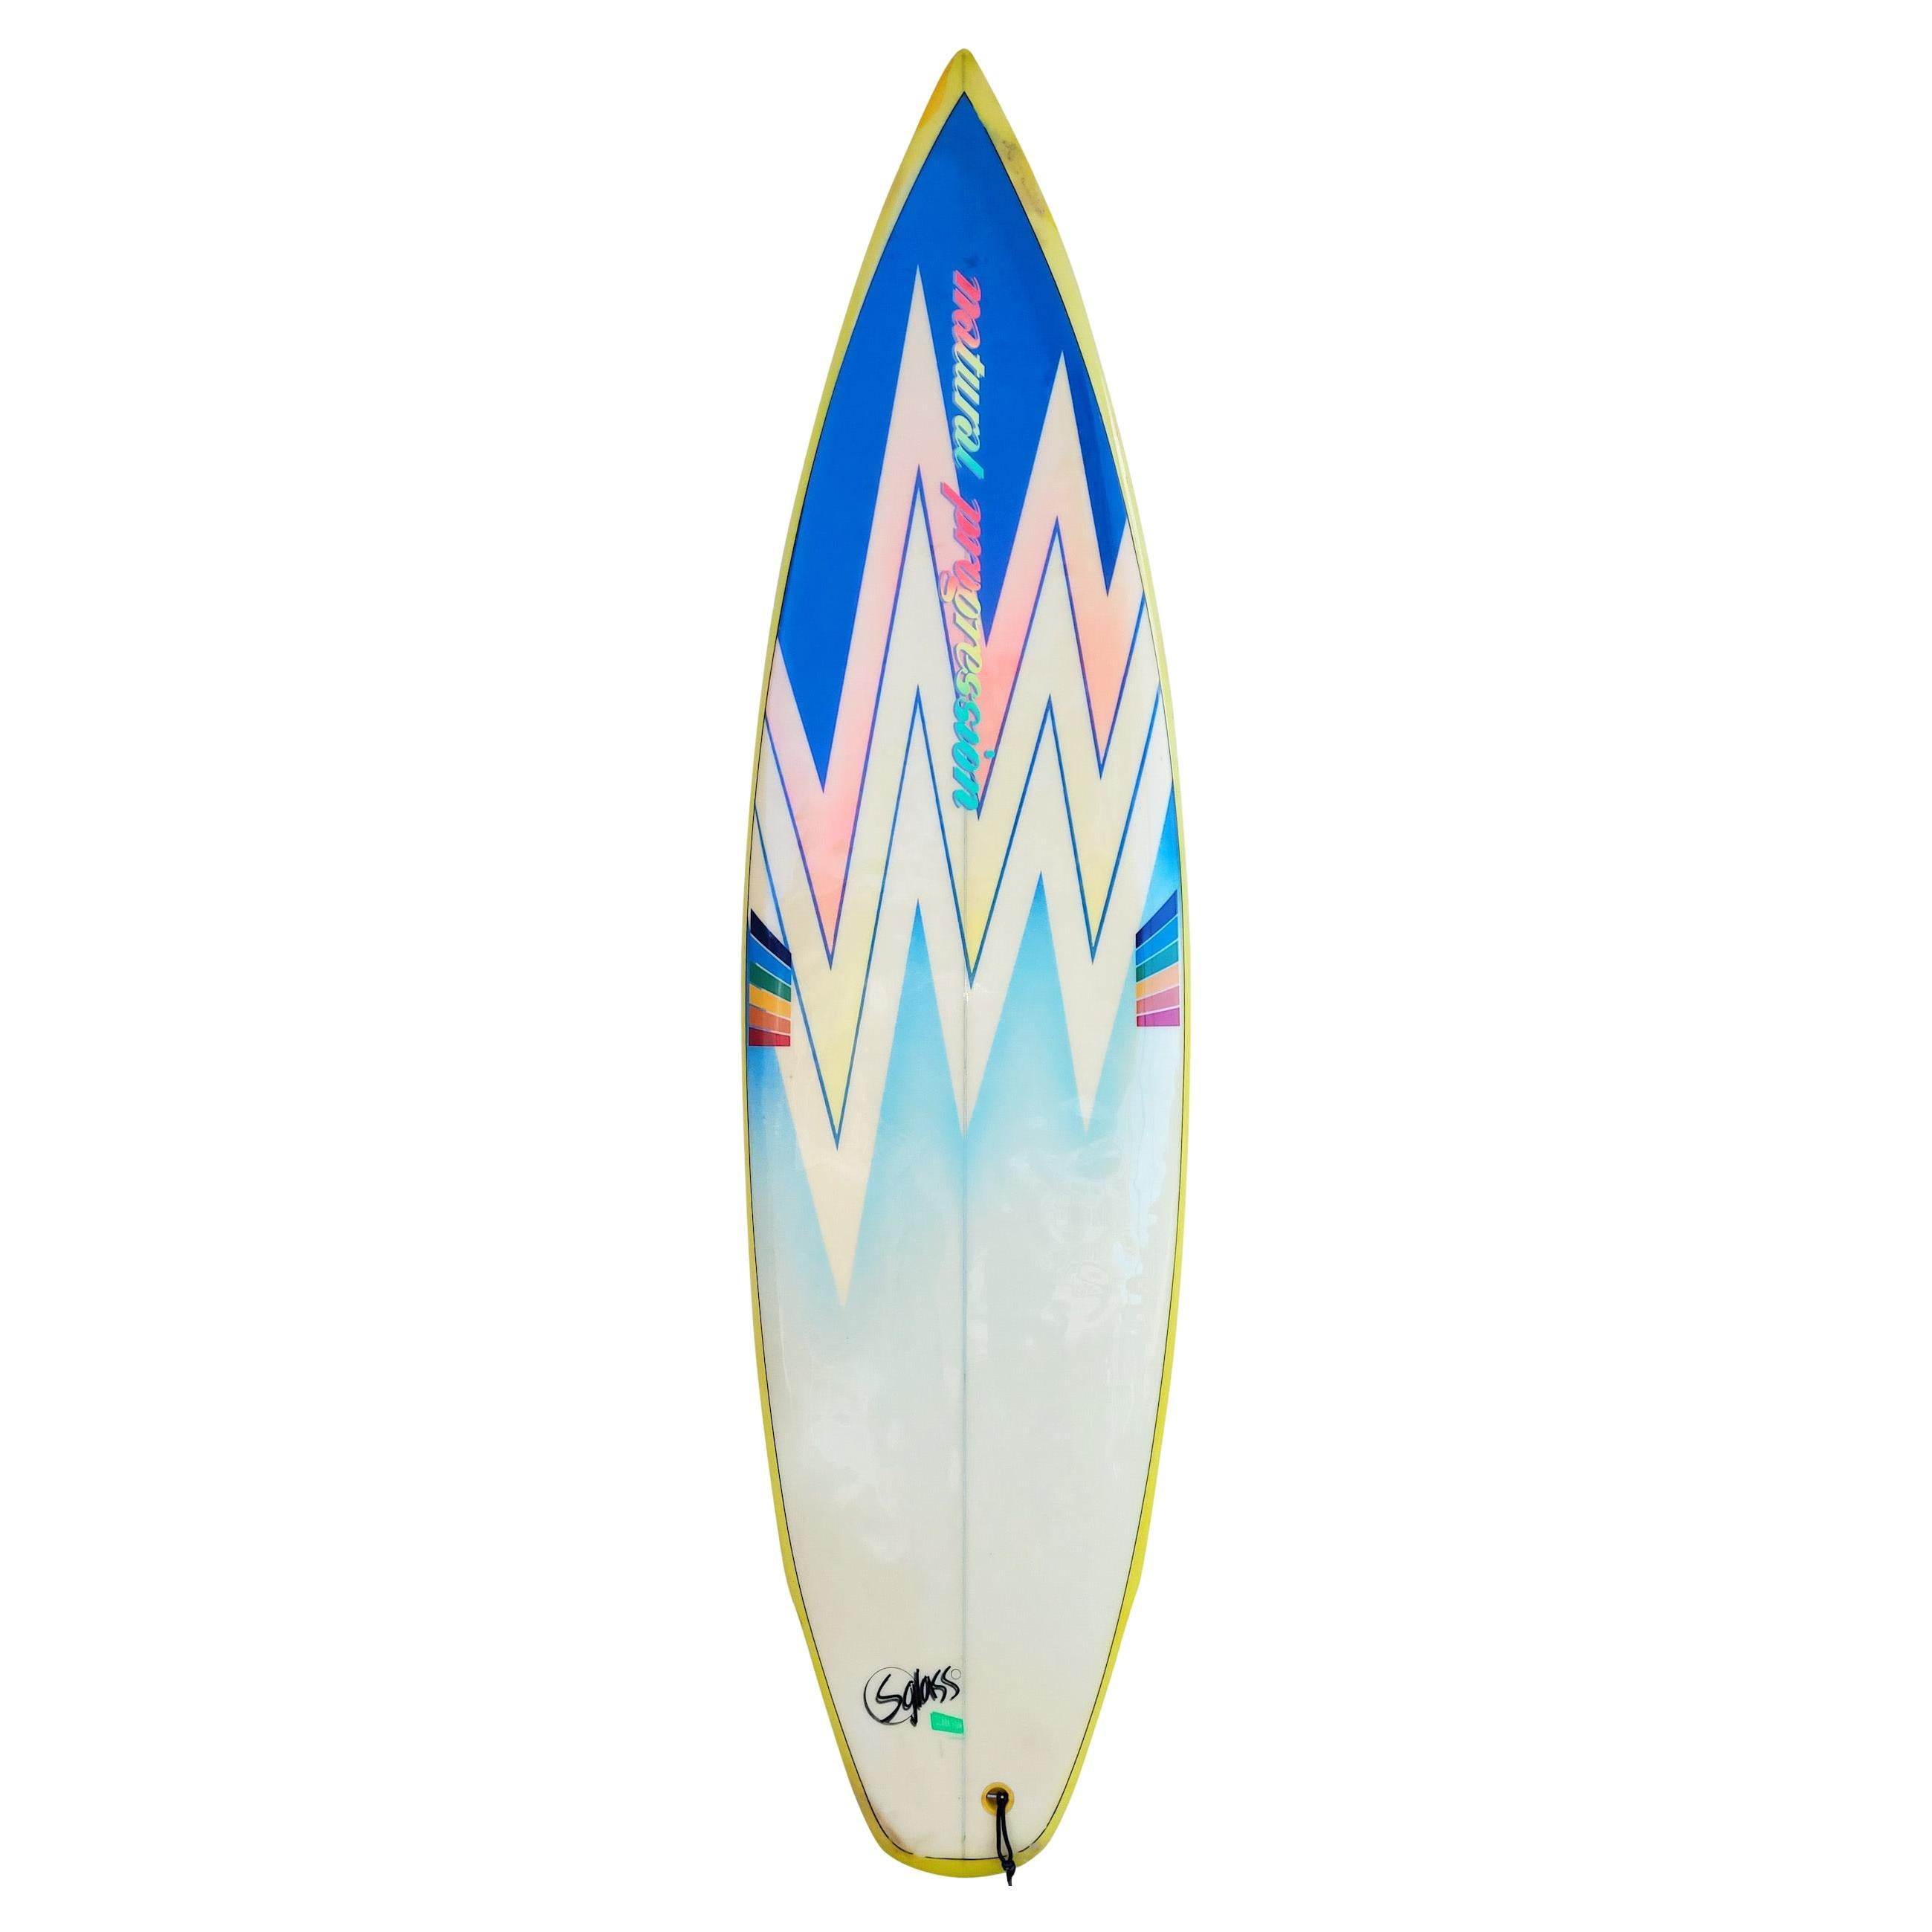 Mid-1980s Vintage Natural Progression Surfboard